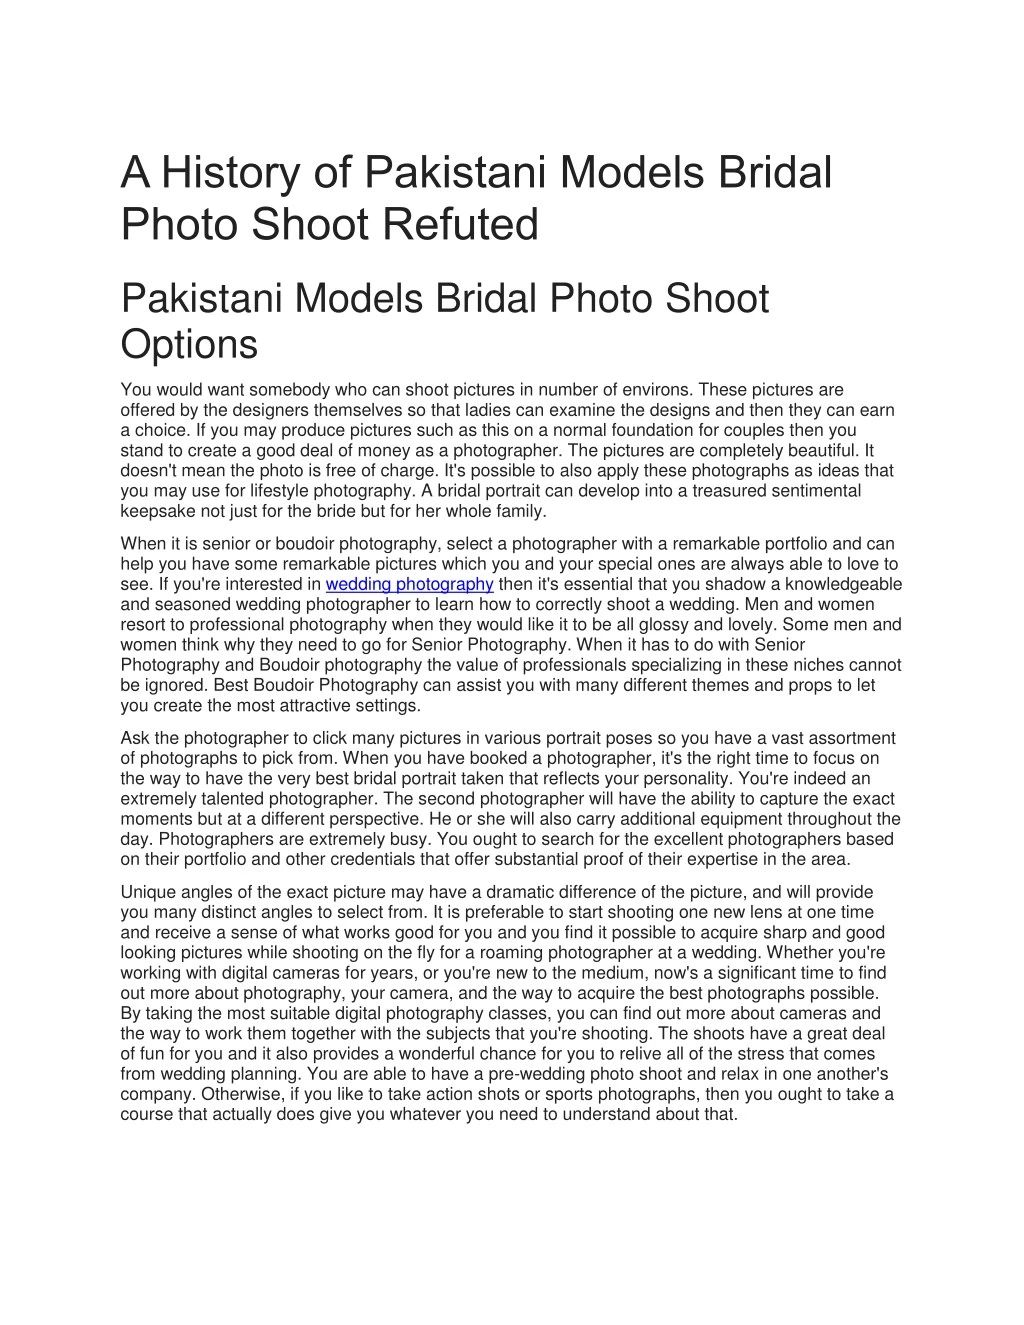 a history of pakistani models bridal photo shoot